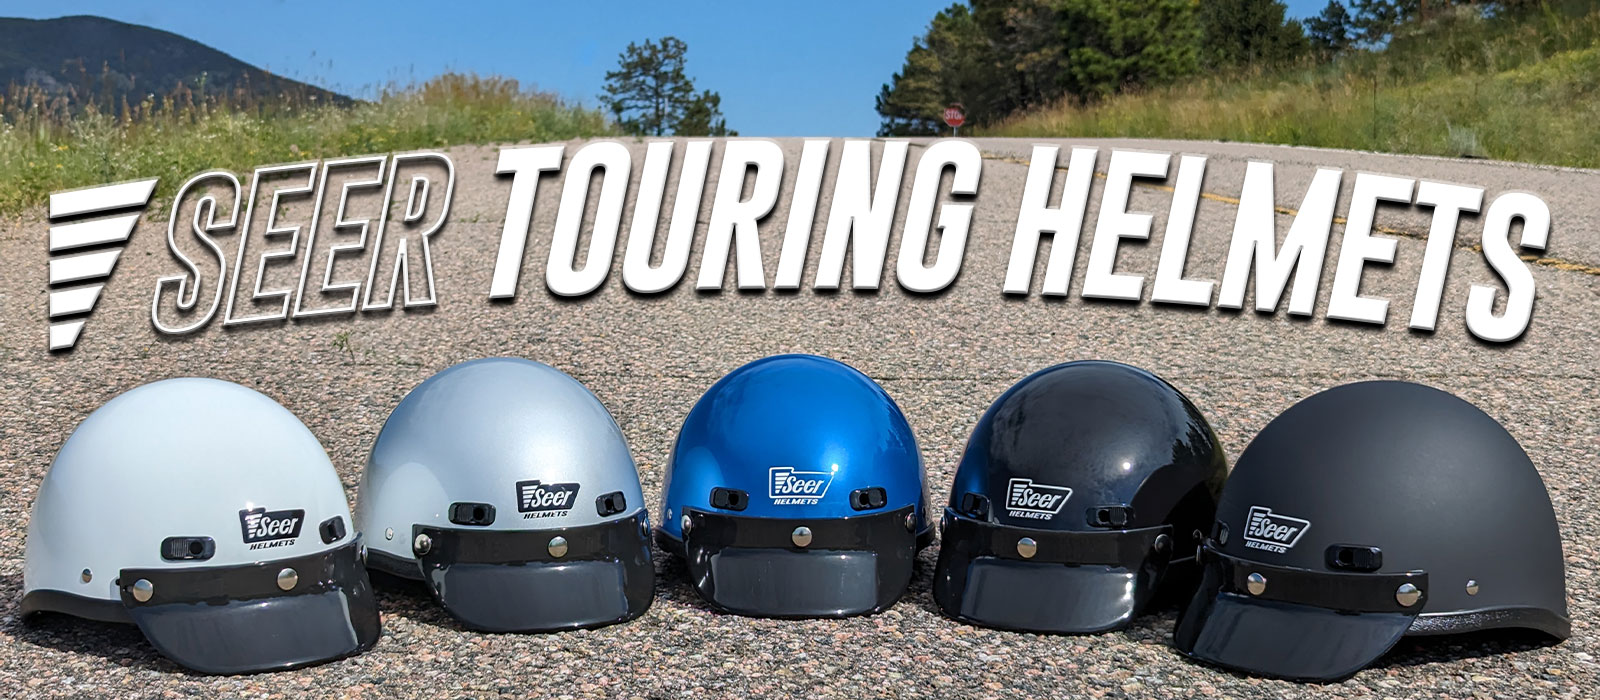 Super Seer Touring Half Shell Motorcycle Helmets